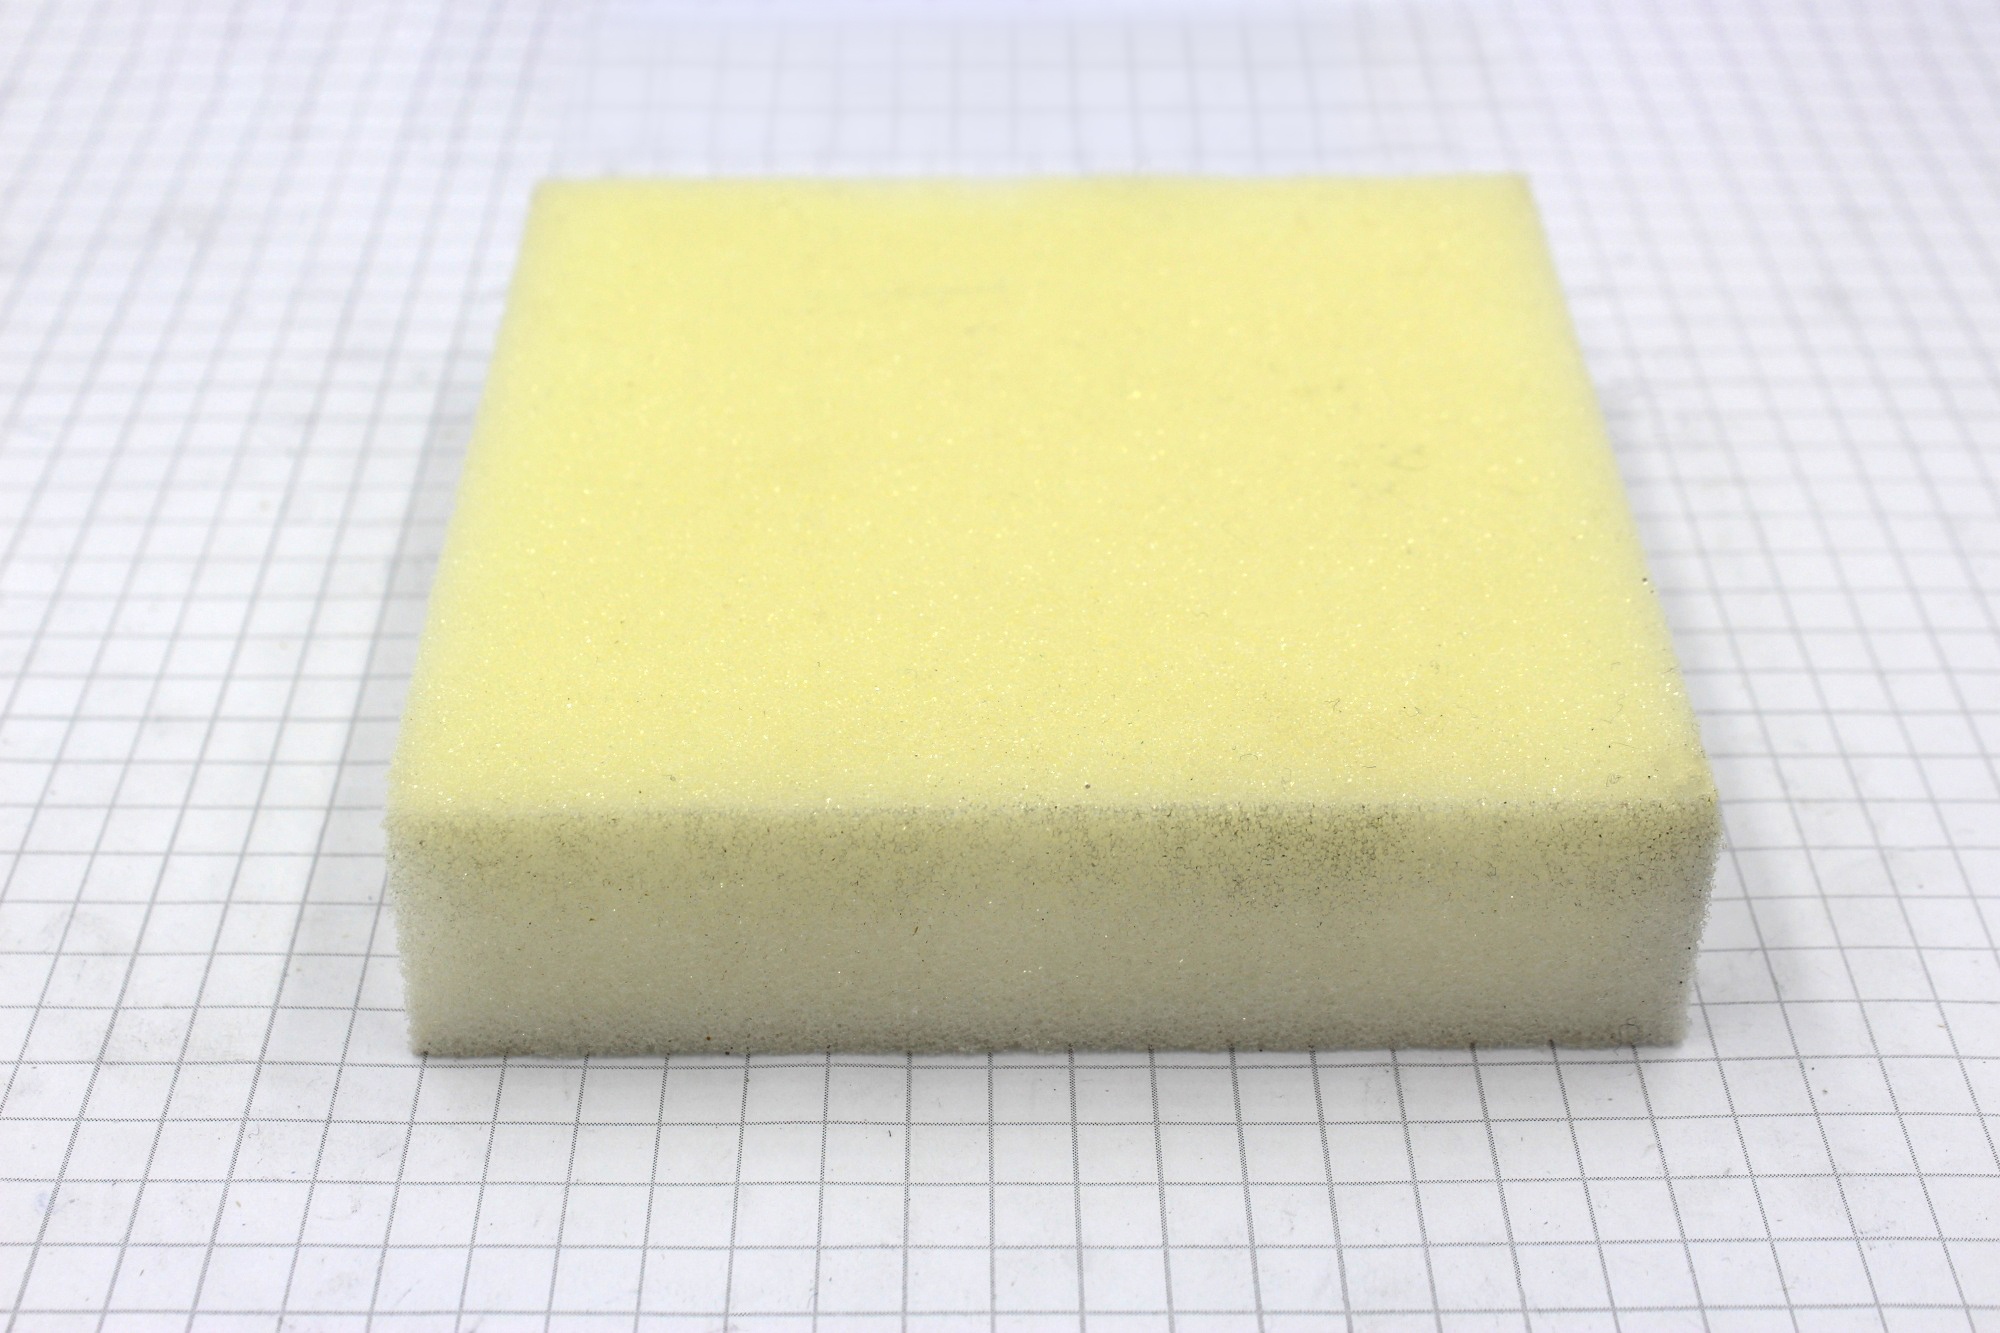 Polyurethane Foam: What Is Inside Furniture?